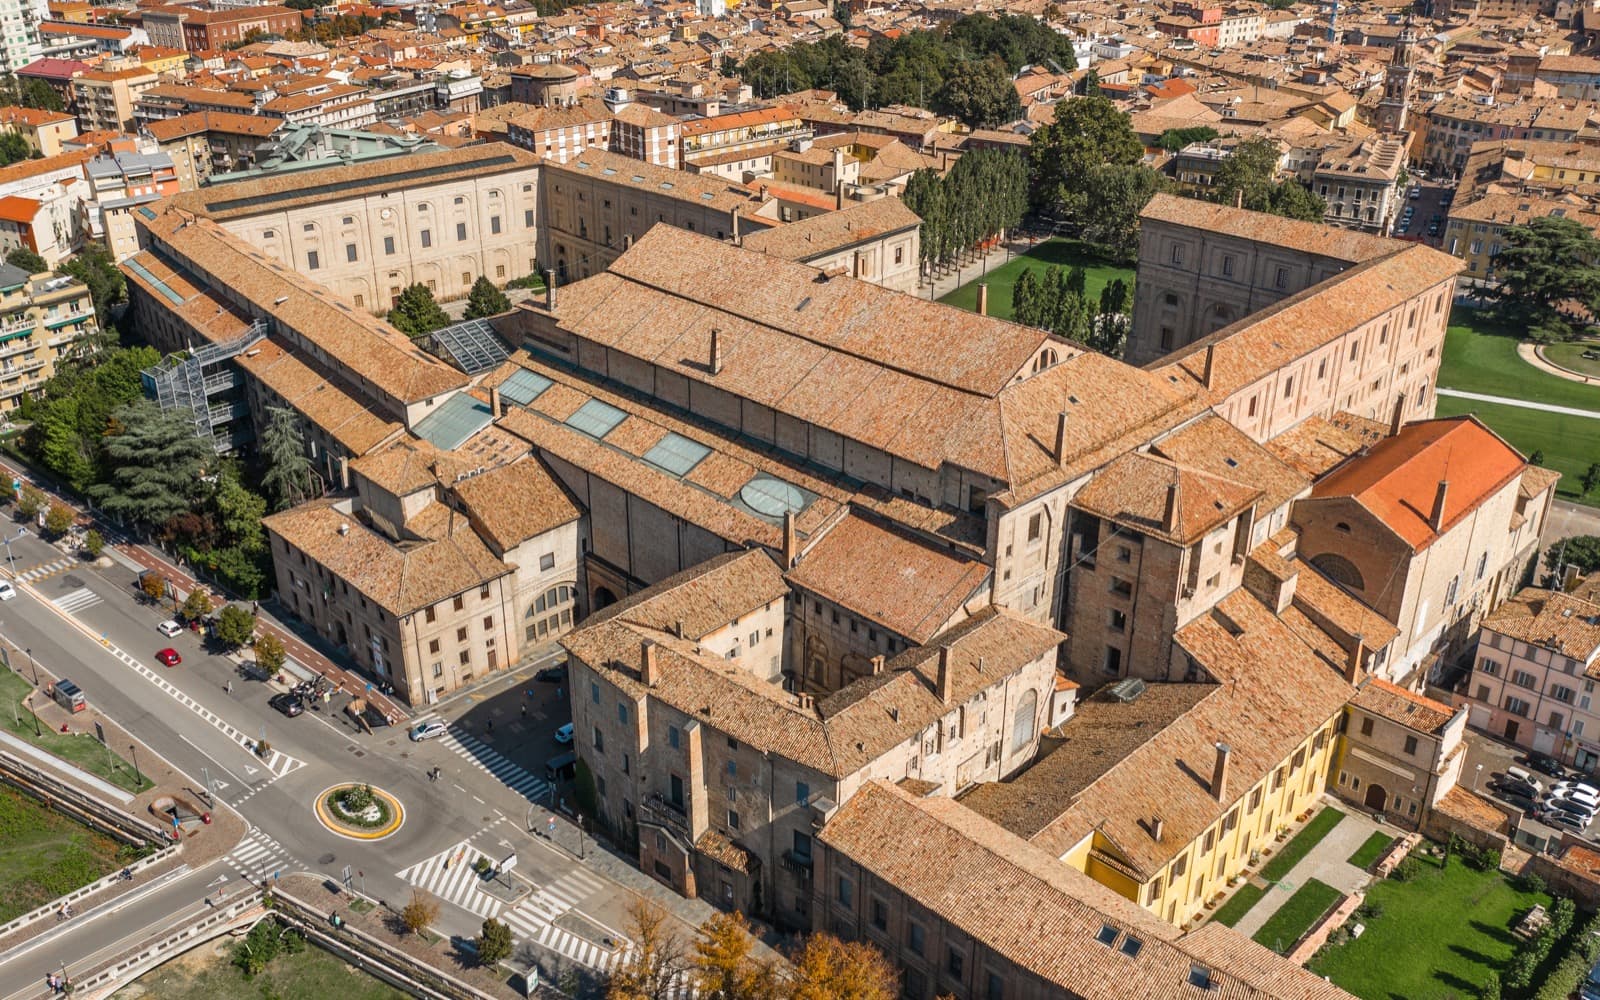 Parma, Complesso Monumentale della Pilotta | Credit: Aleksandr Medvedkov, via shutterstock